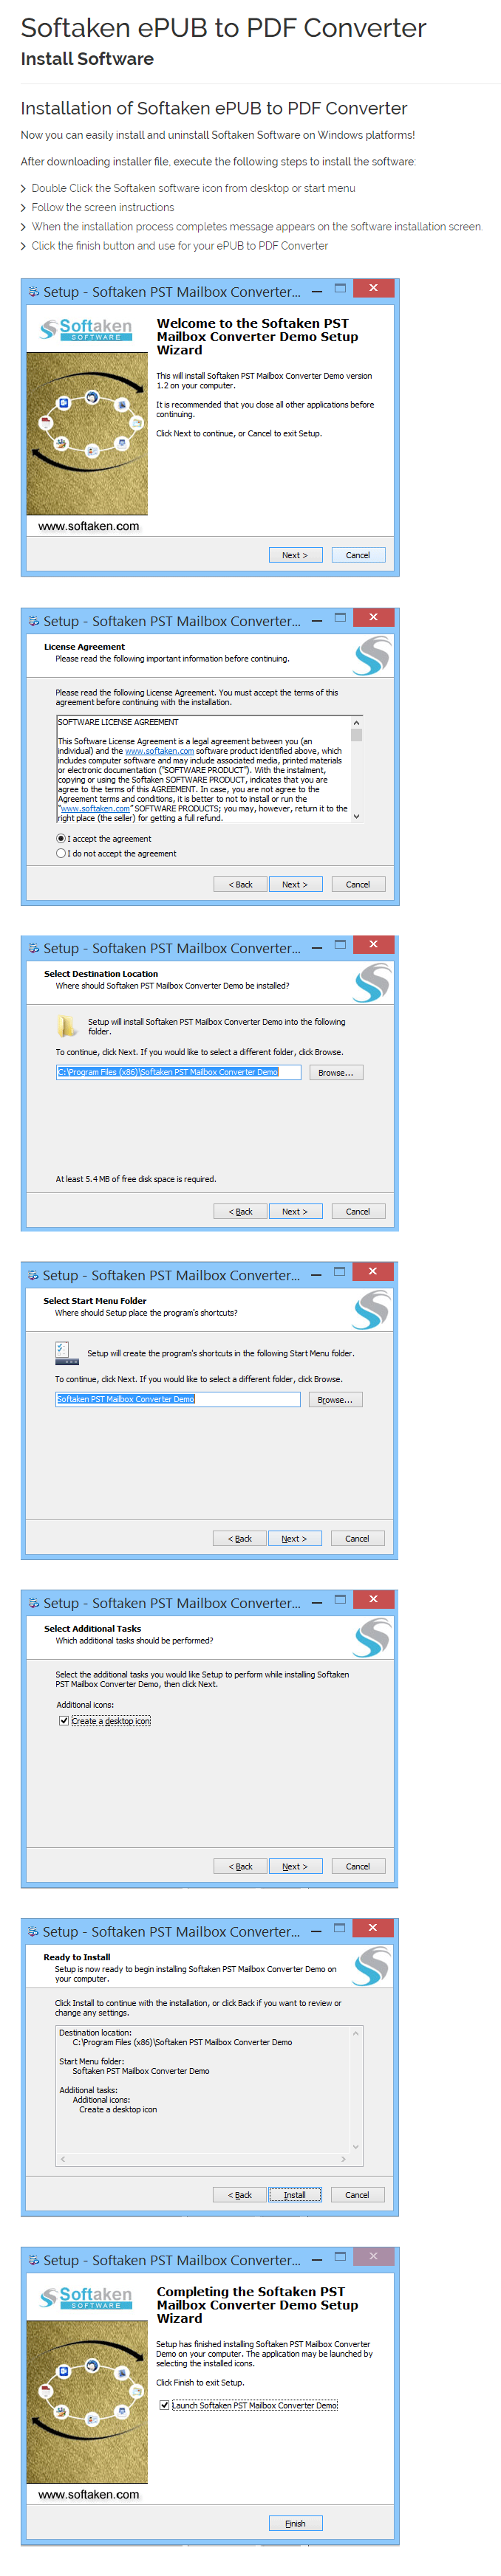 EPUB to PDF Converter Installation